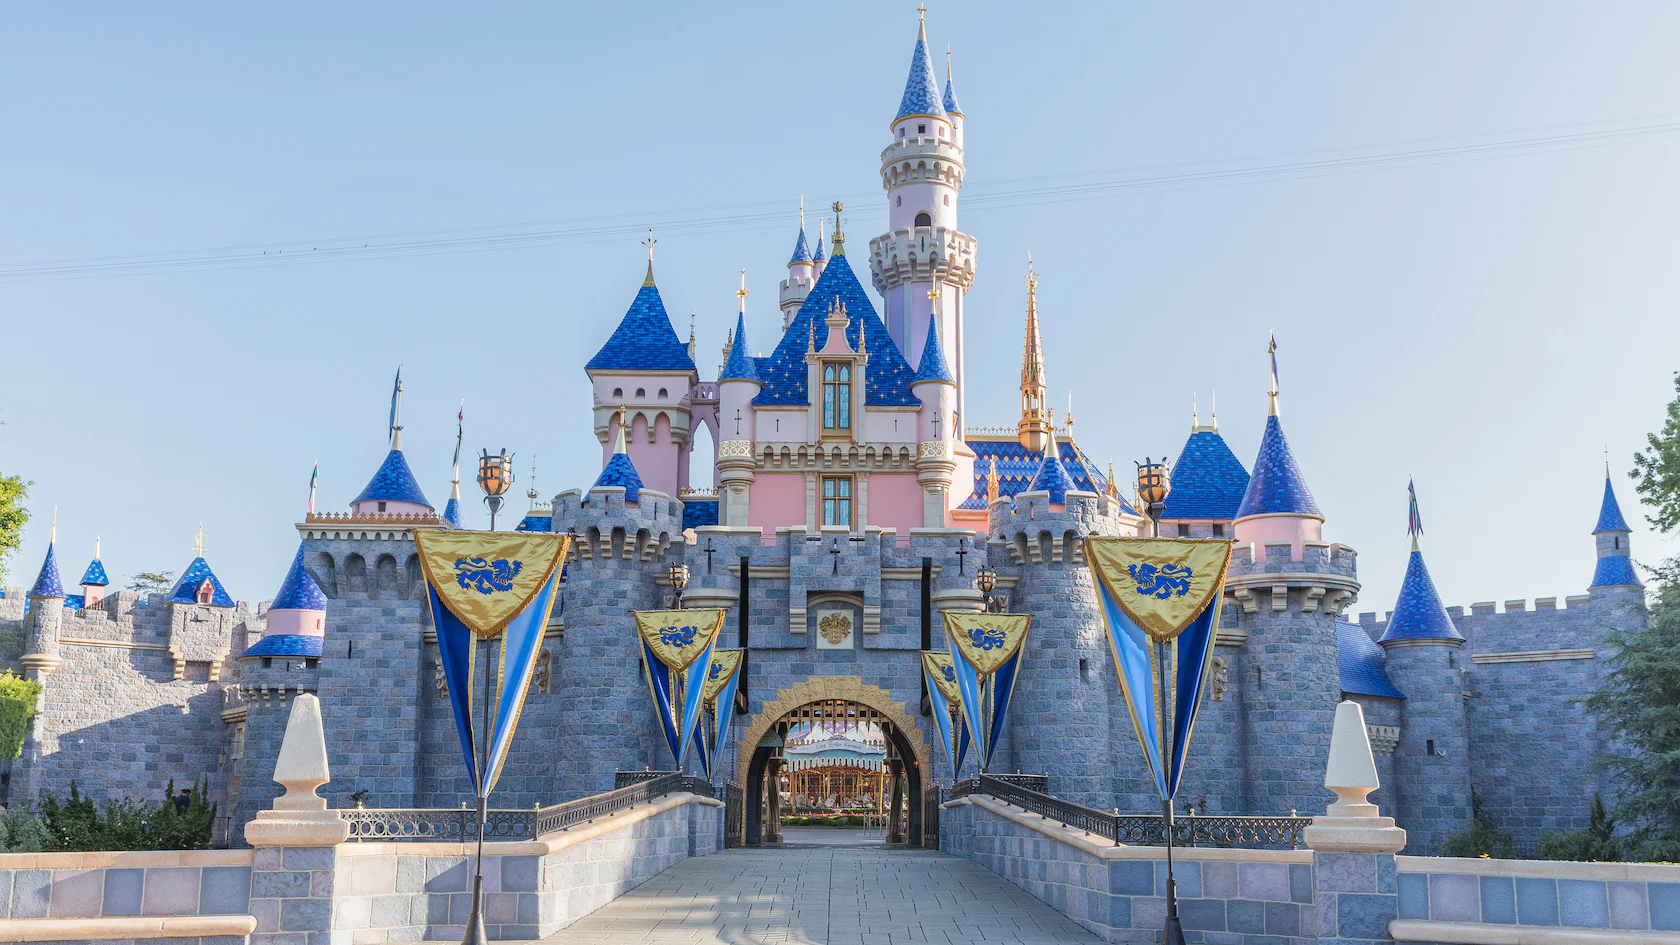 Disneyland – The World’s Most Visited Theme Park